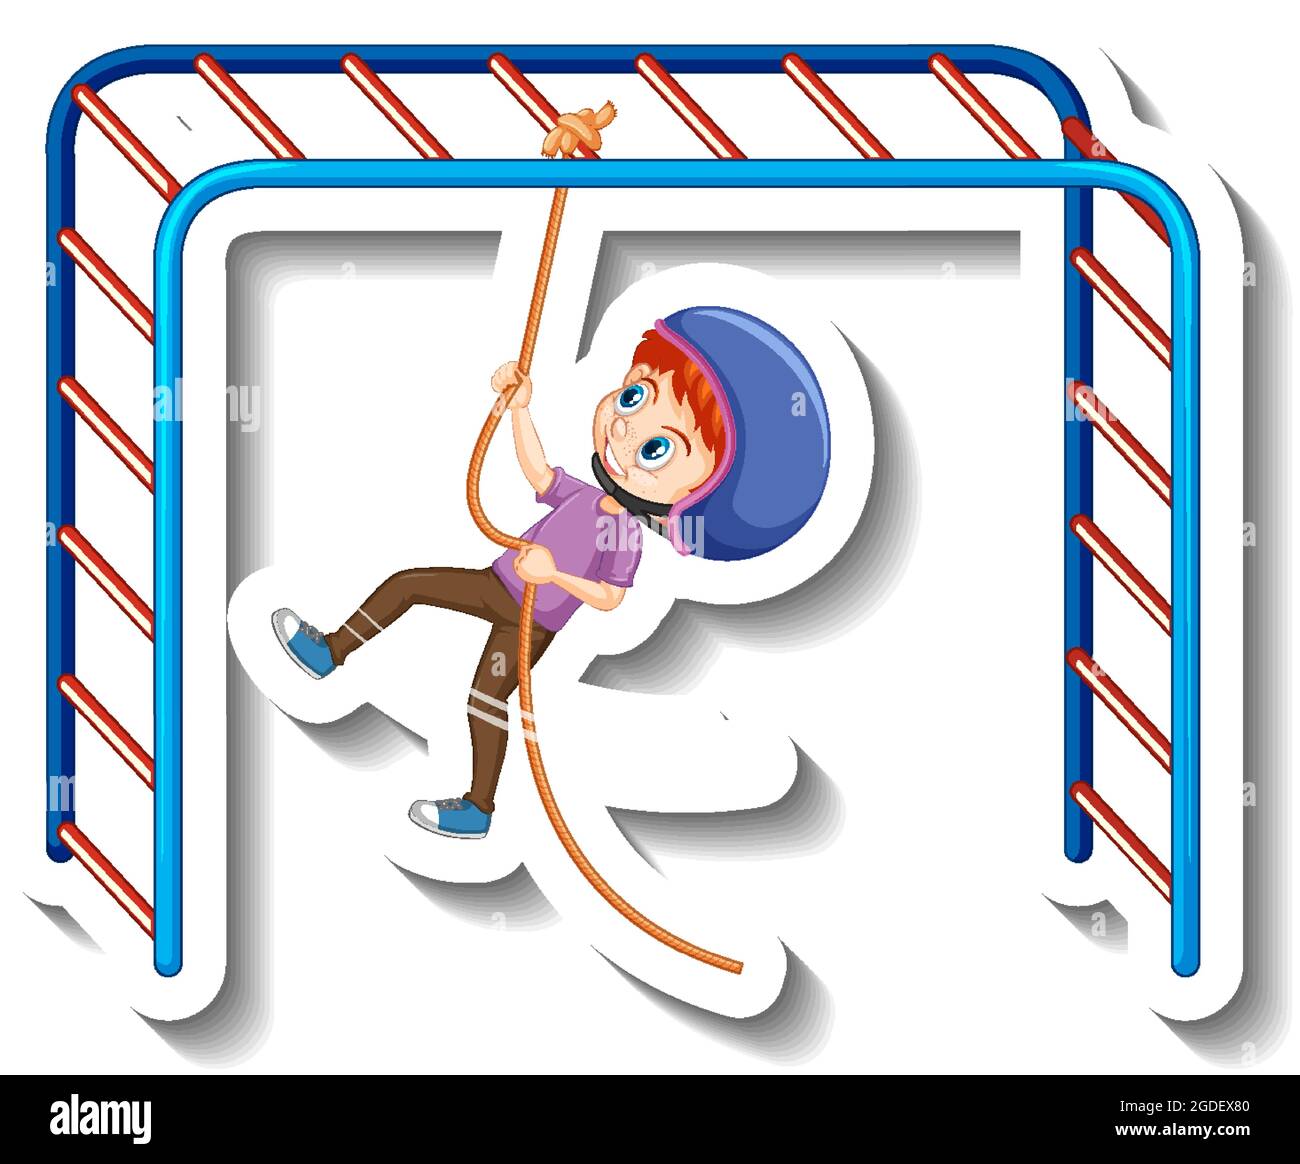 Ein Junge hängt an Seil Cartoon Aufkleber Illustration Stock Vektor